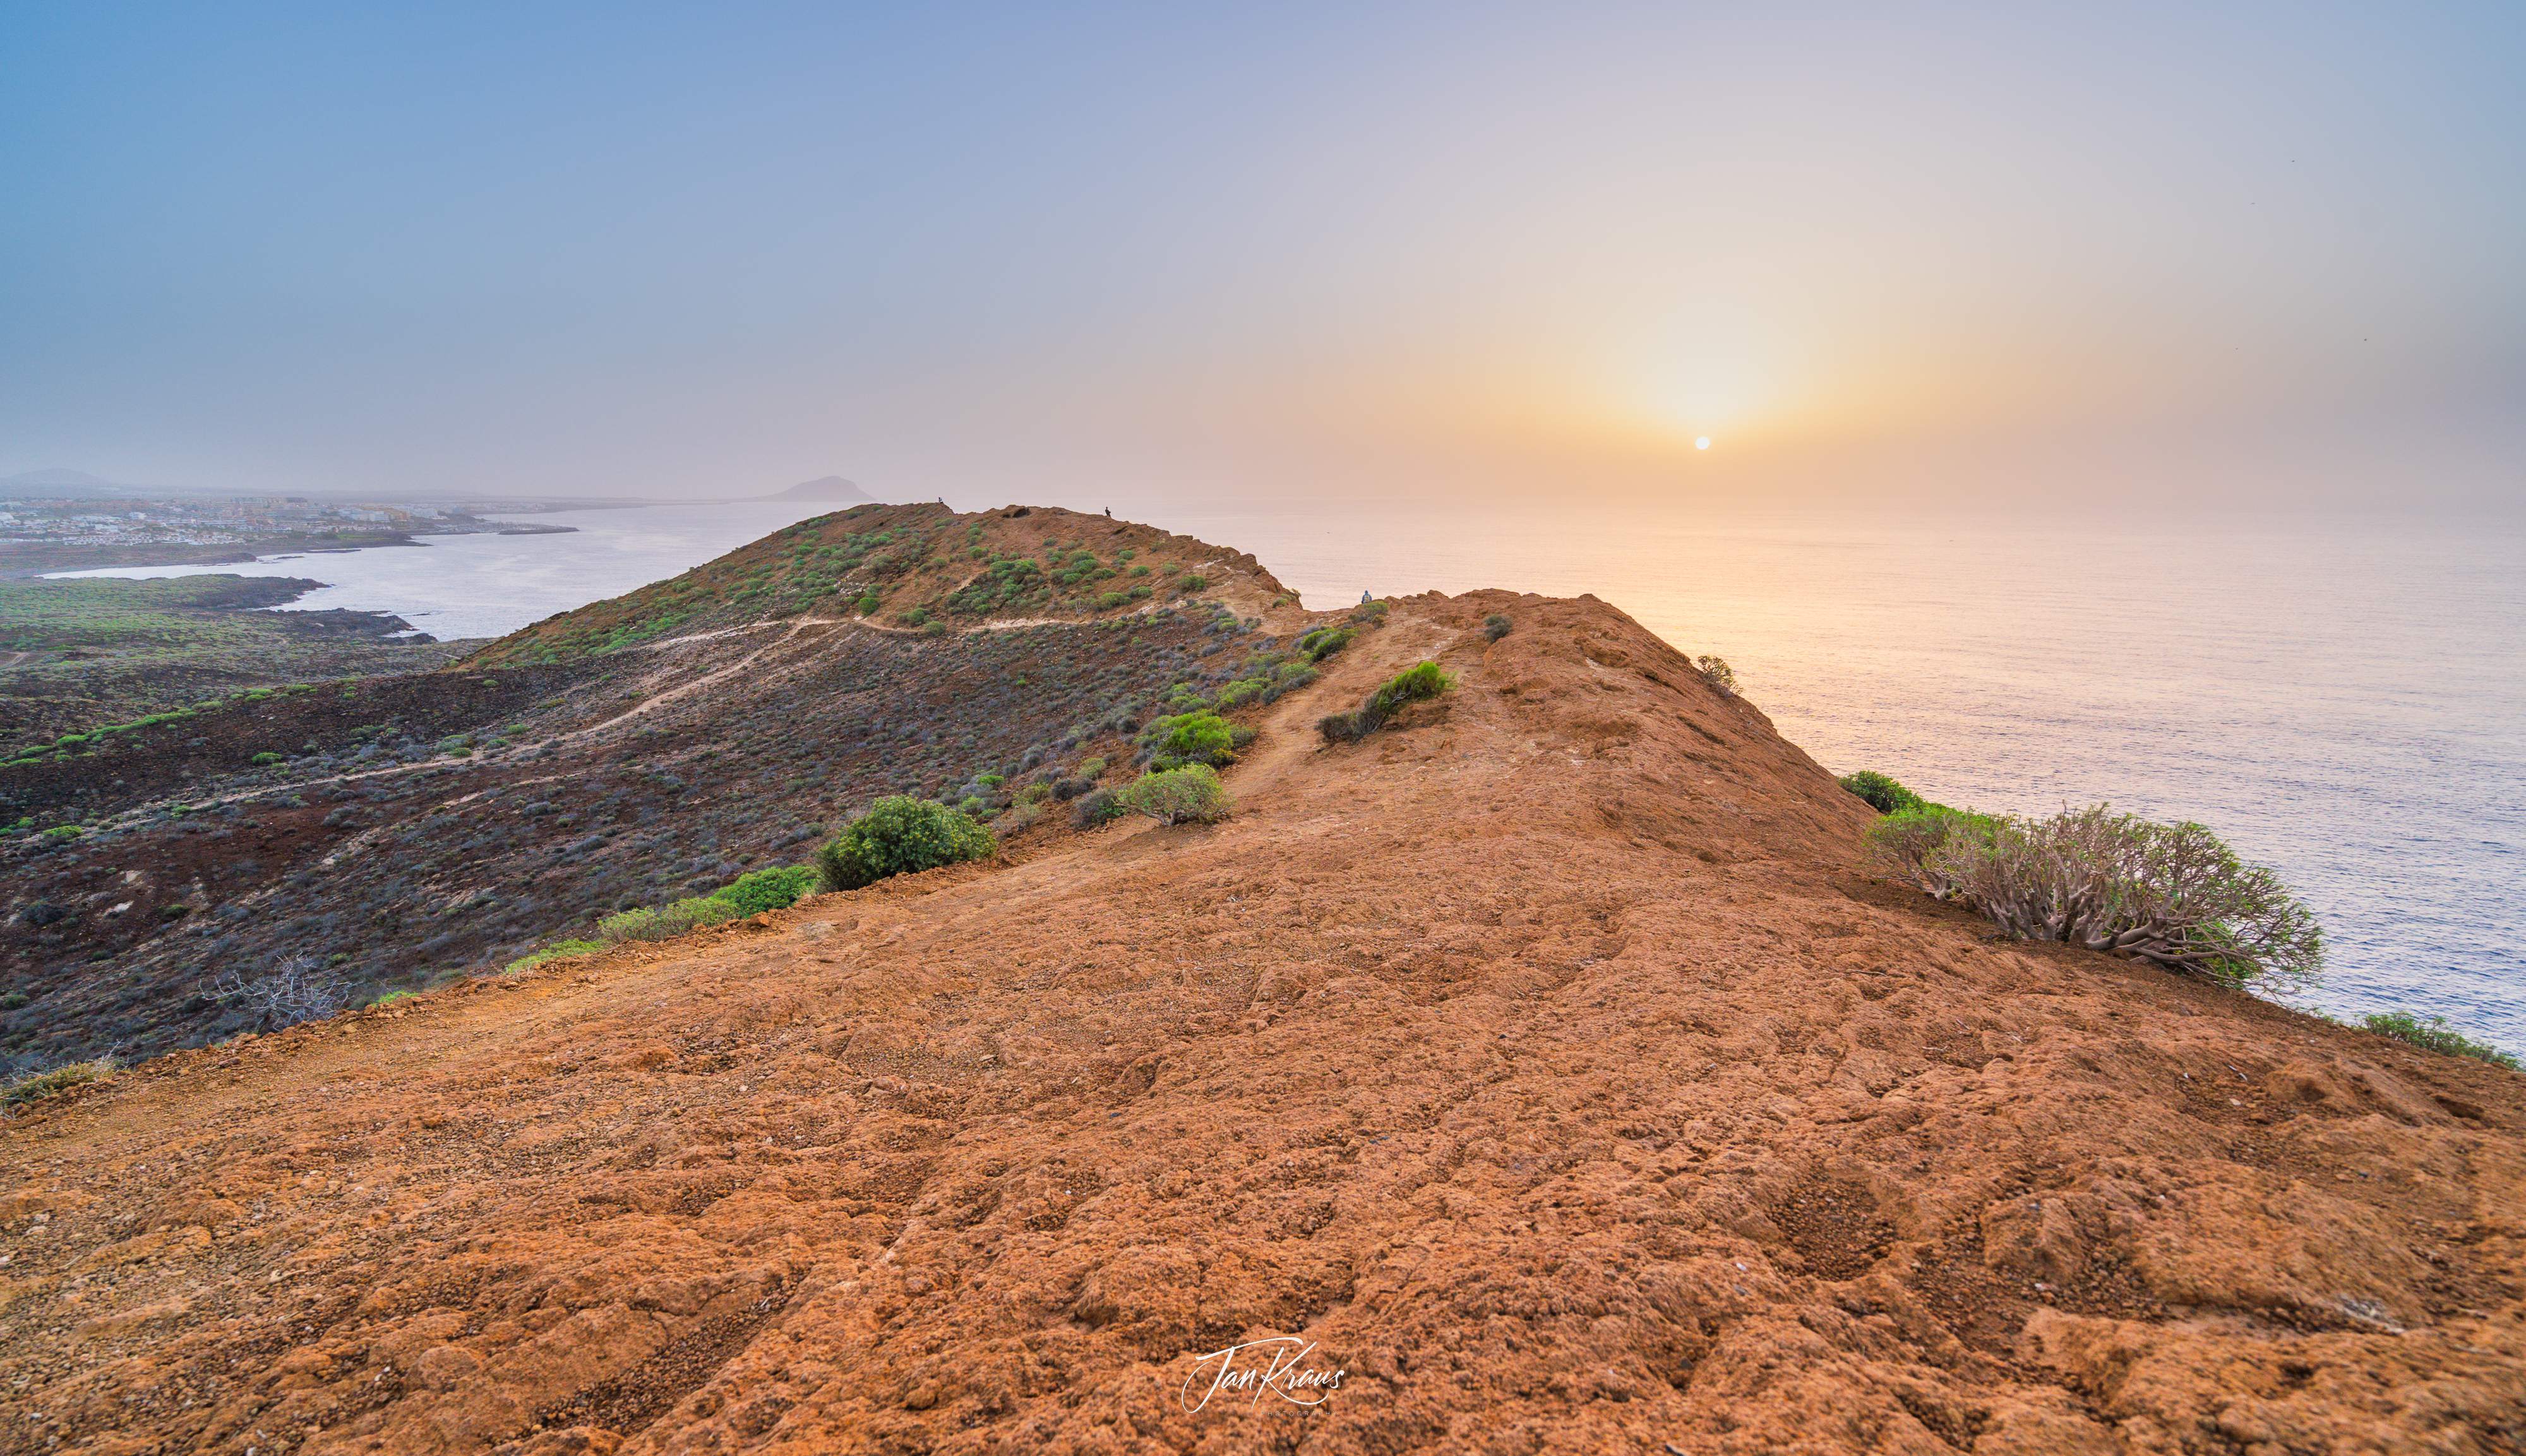 A beautiful panorama of the sunrise, captured at Montaña Amarilla, Tenerife, Canary Islands, Spain